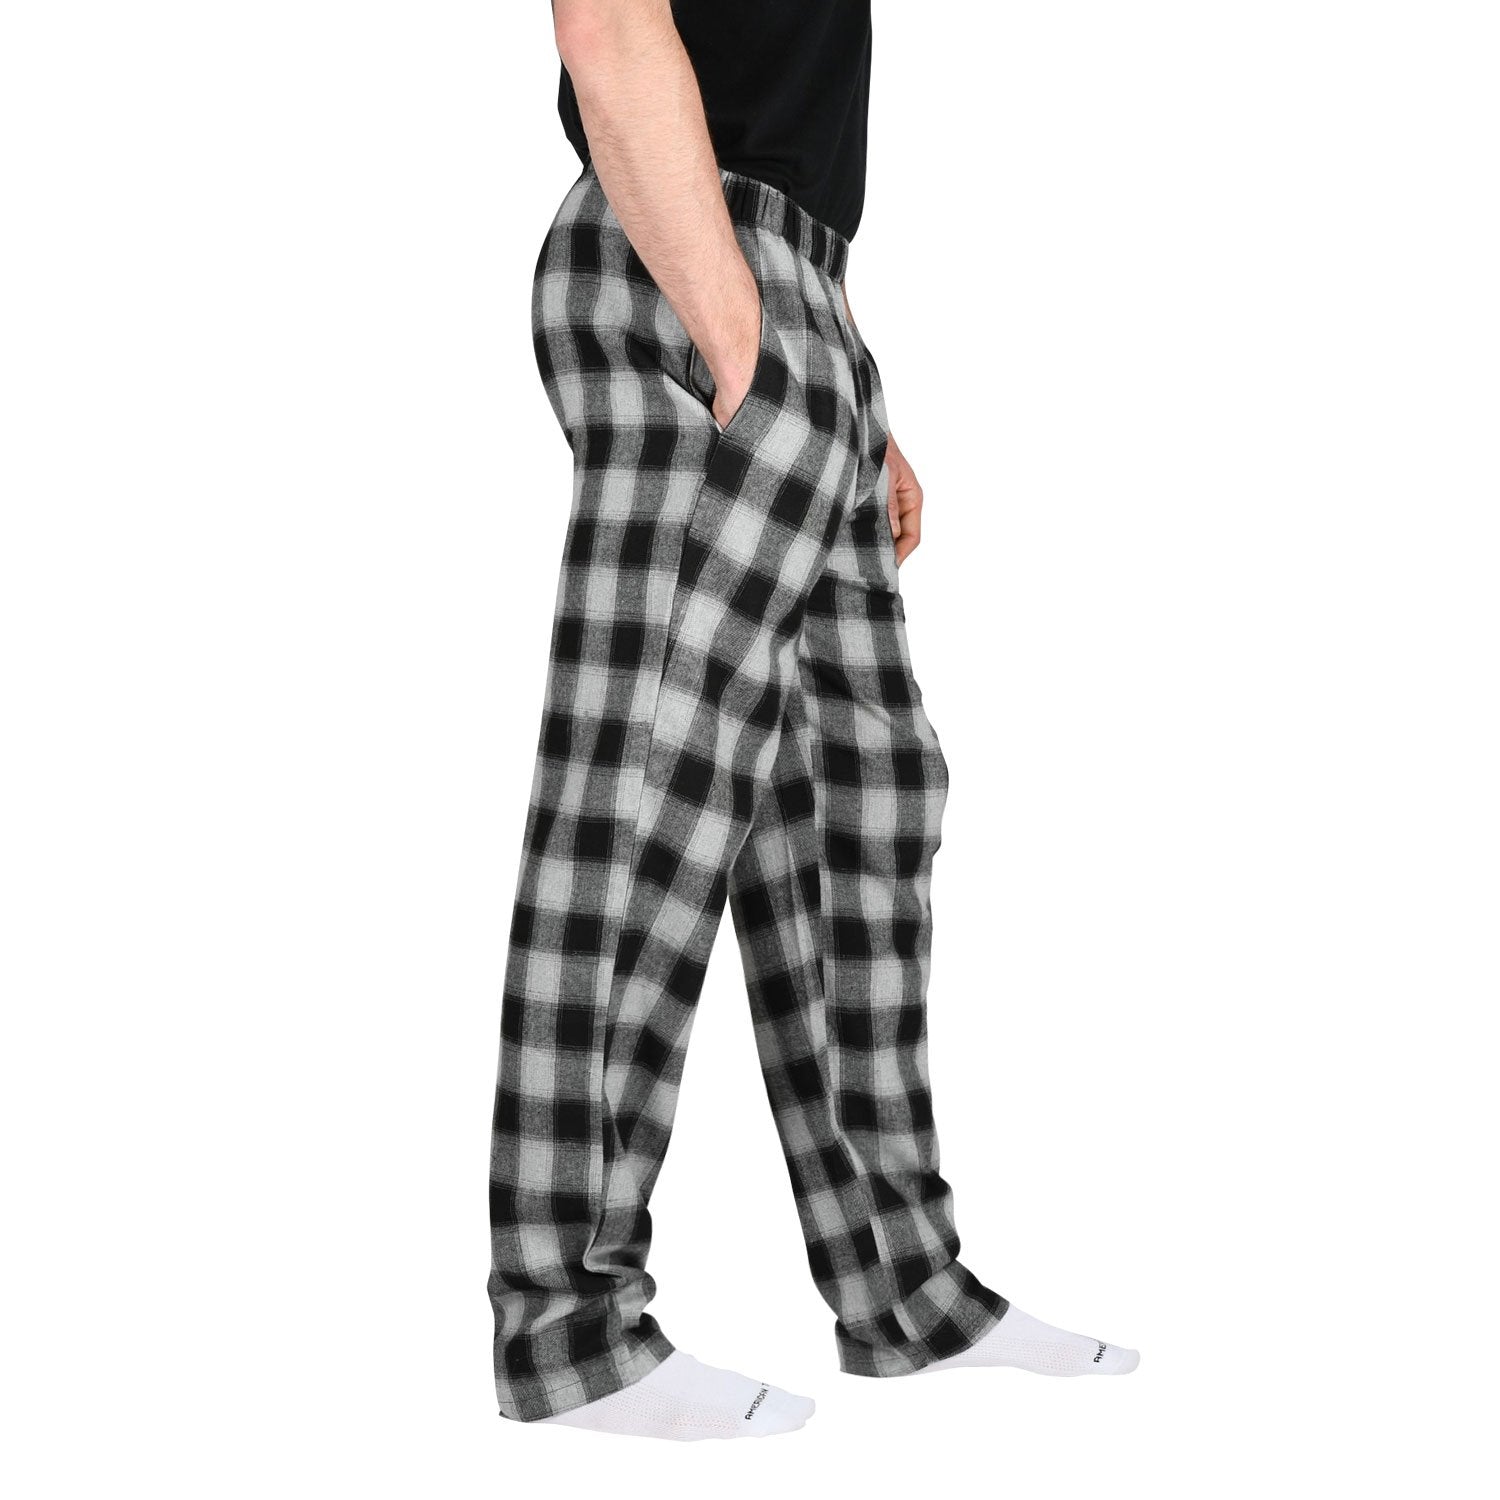 Tall Men's Pajamas in Grey Plaid 